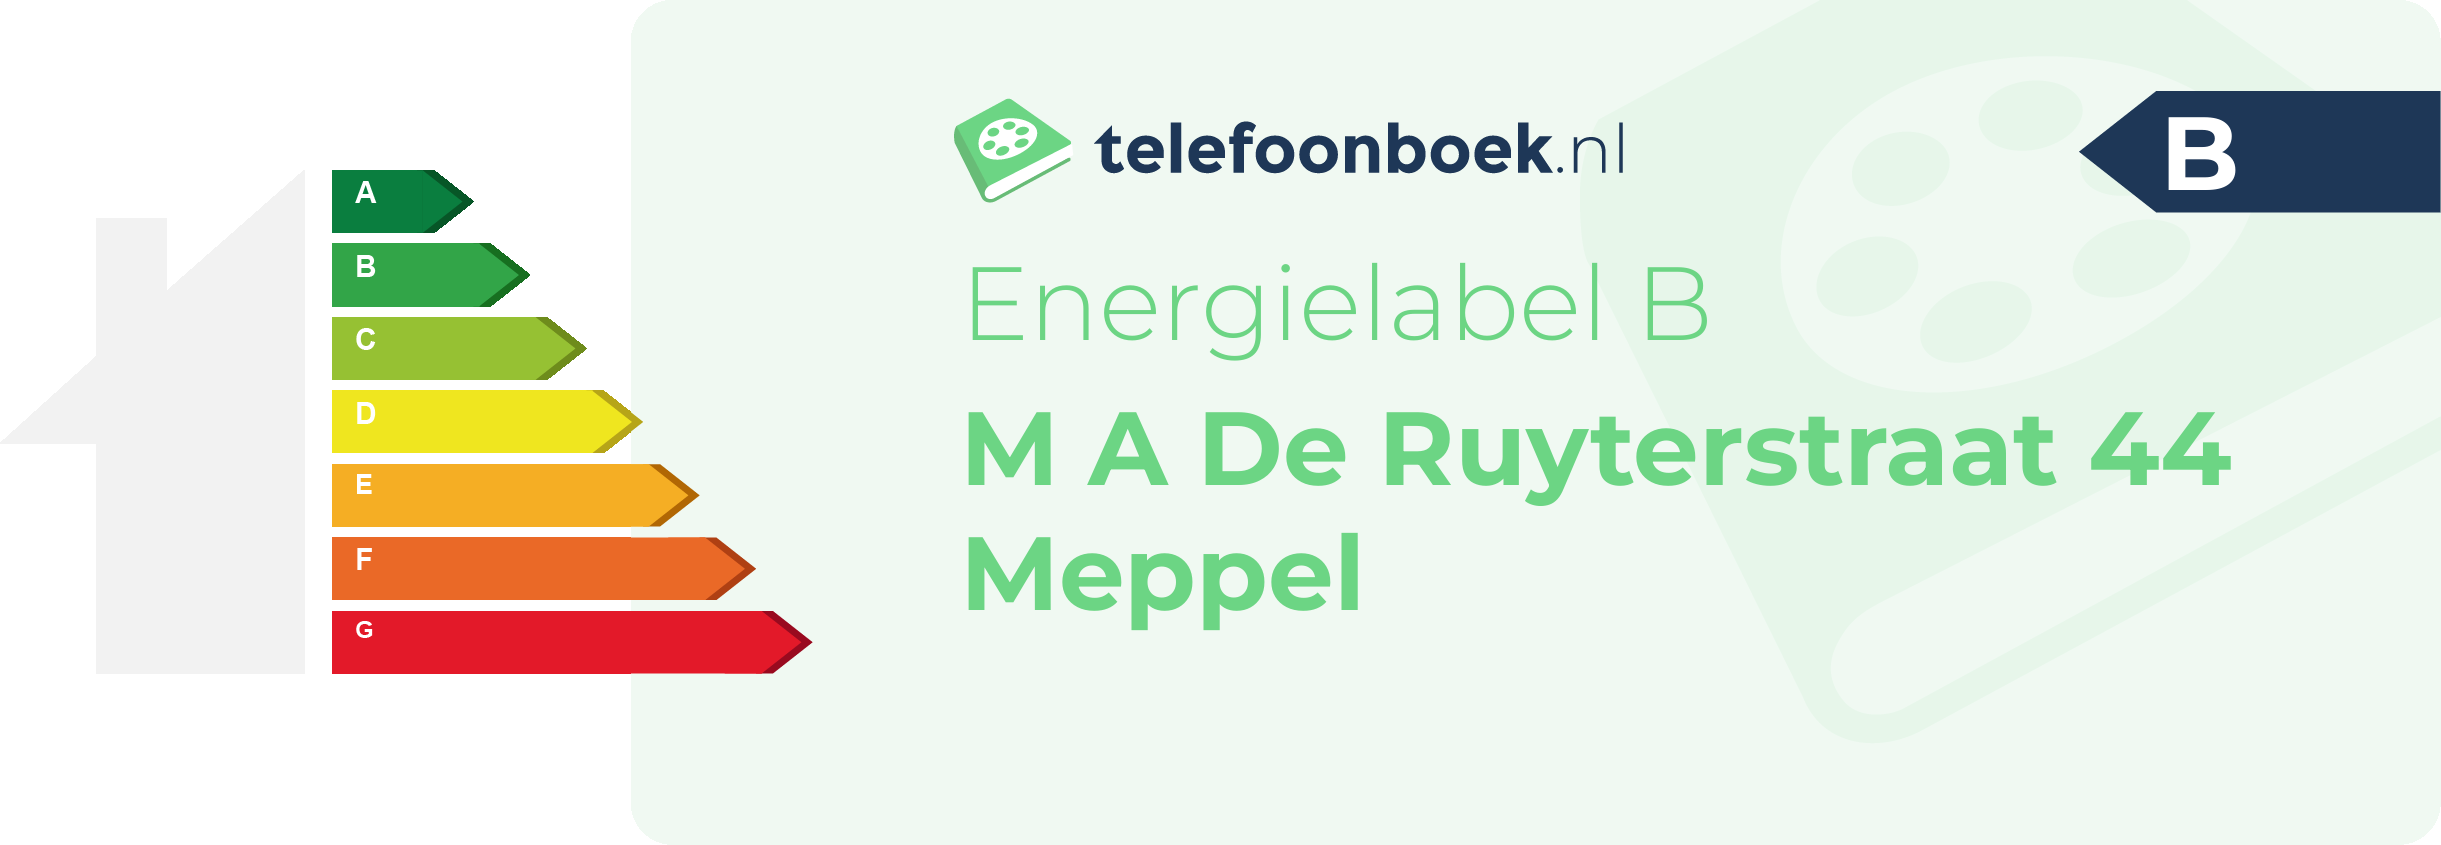 Energielabel M A De Ruyterstraat 44 Meppel